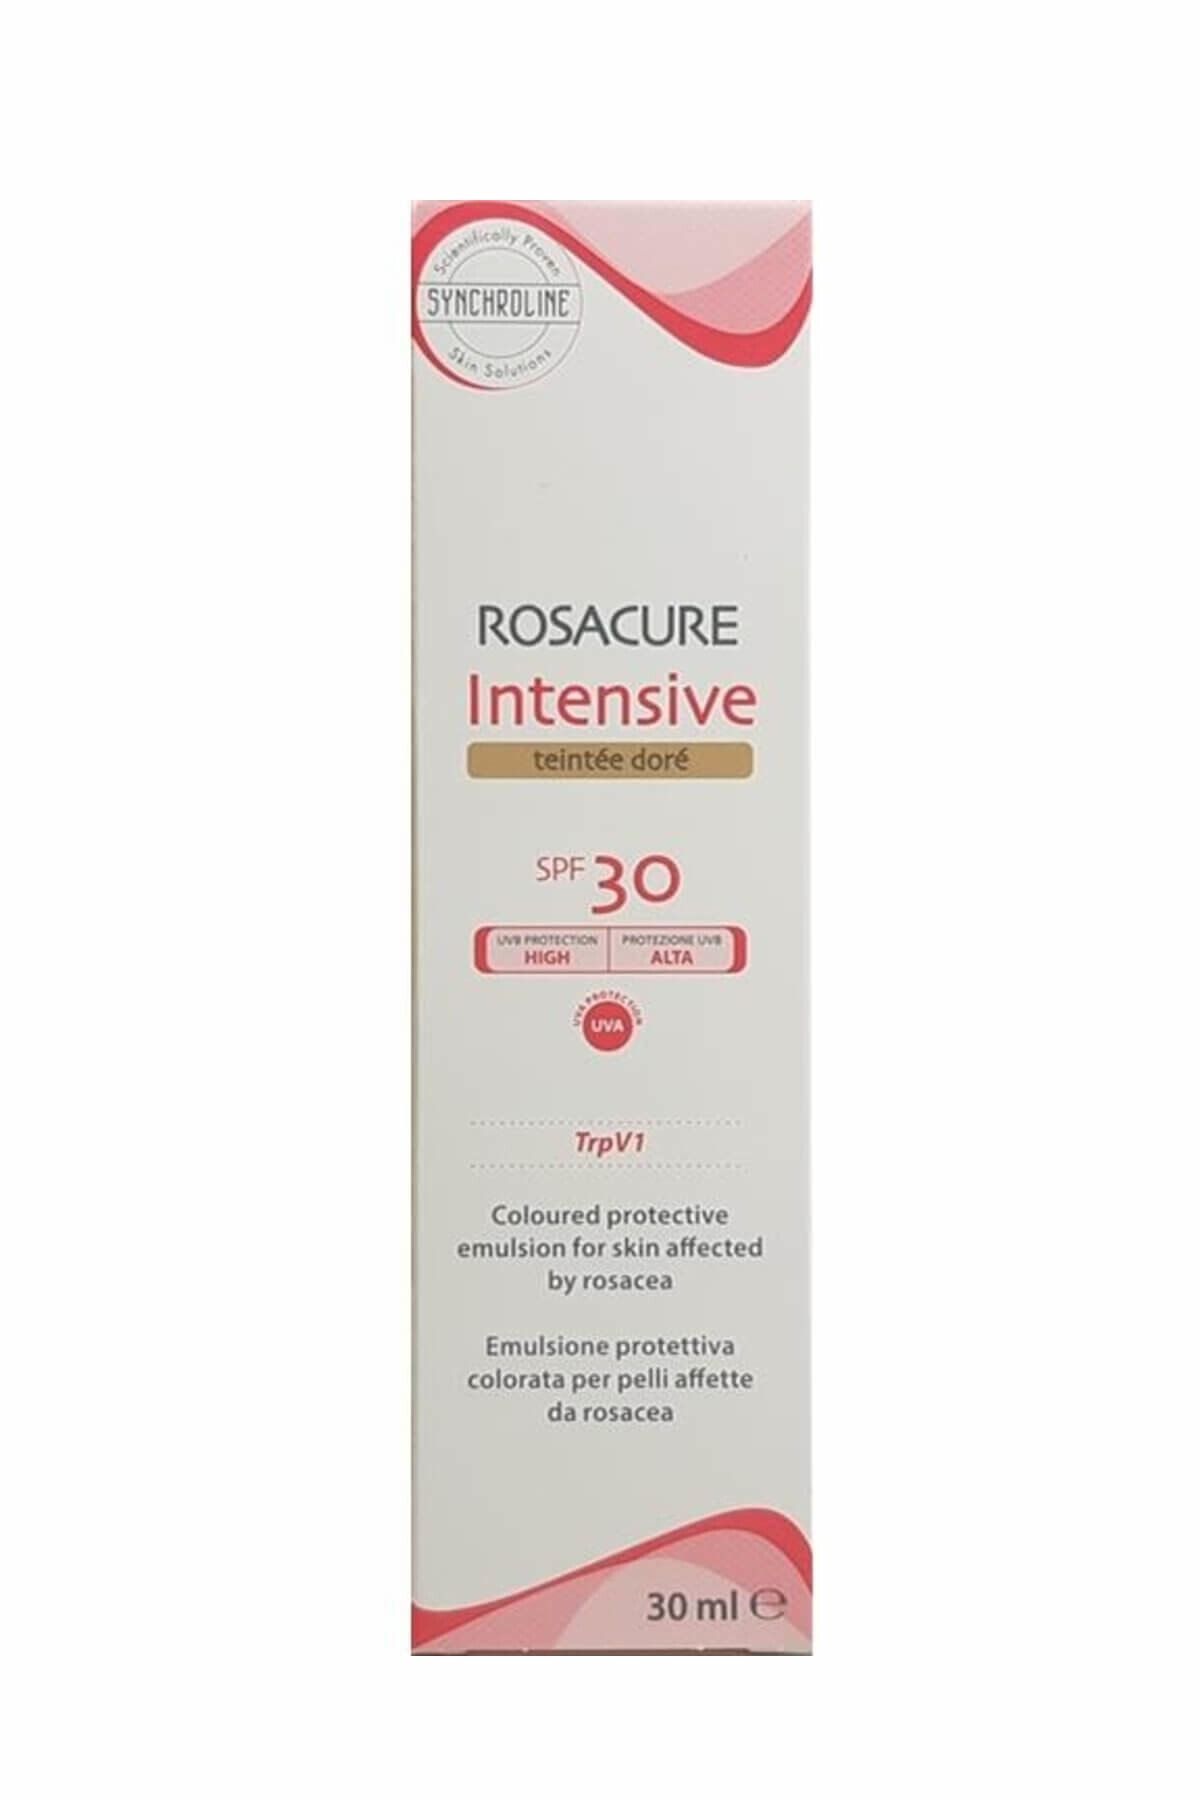 SYNCHROLINE Rosacure Intensive Spf30 Tinted Dore, 30ml